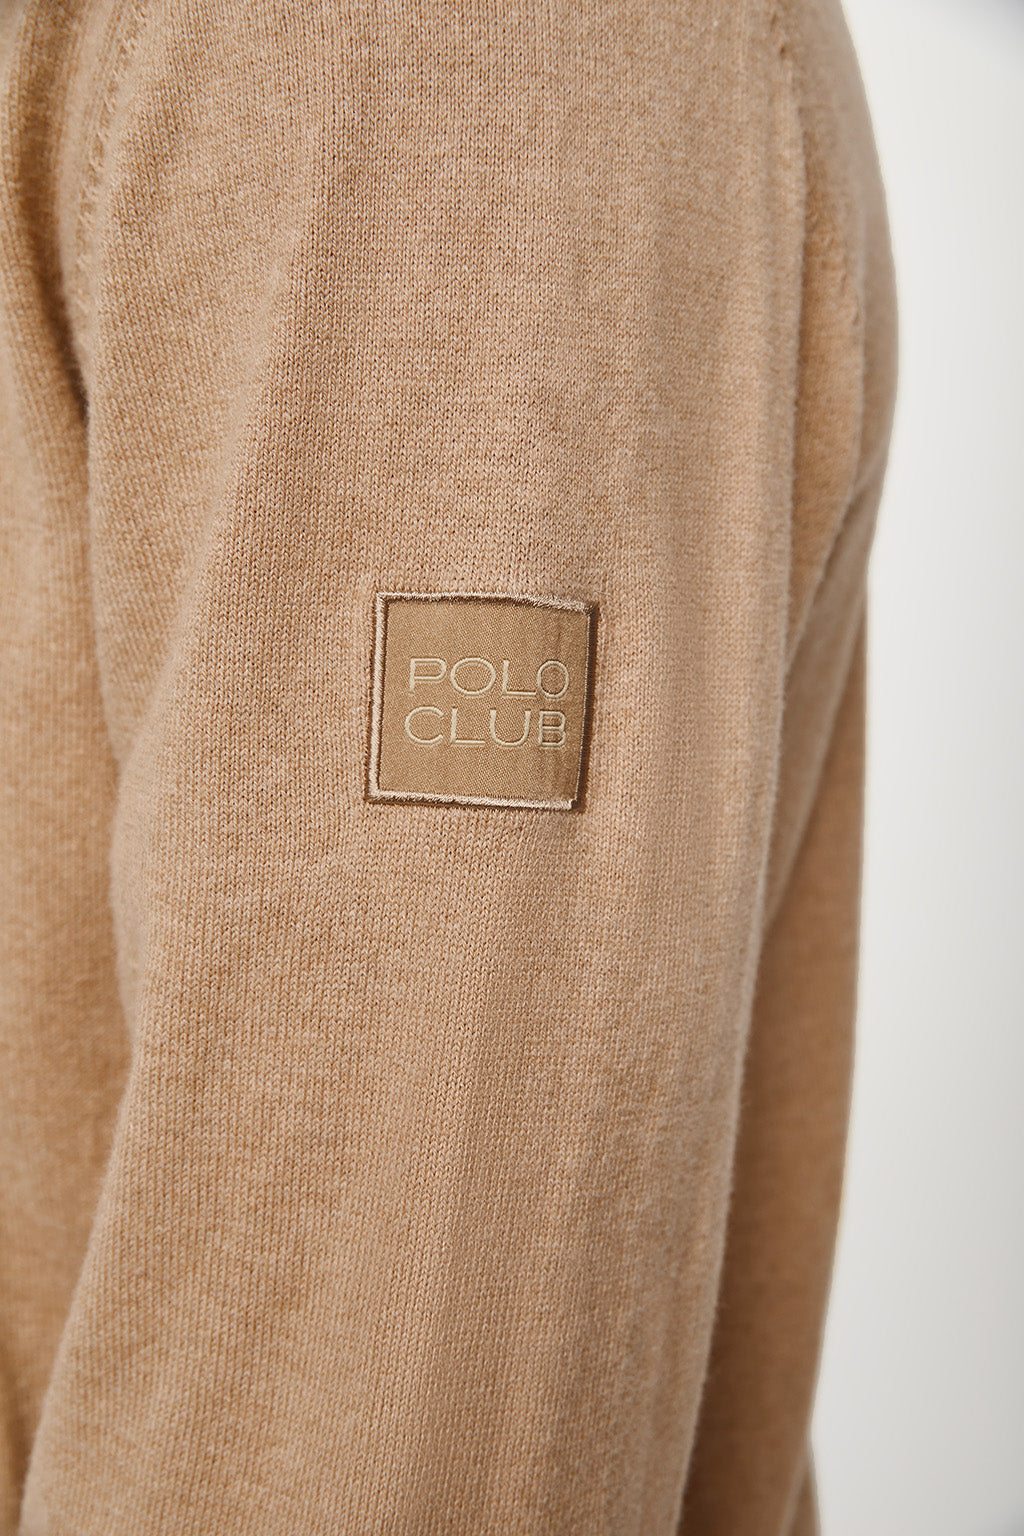 Cárdigan cashmere azul marino, cremallera y logo – Polo Club